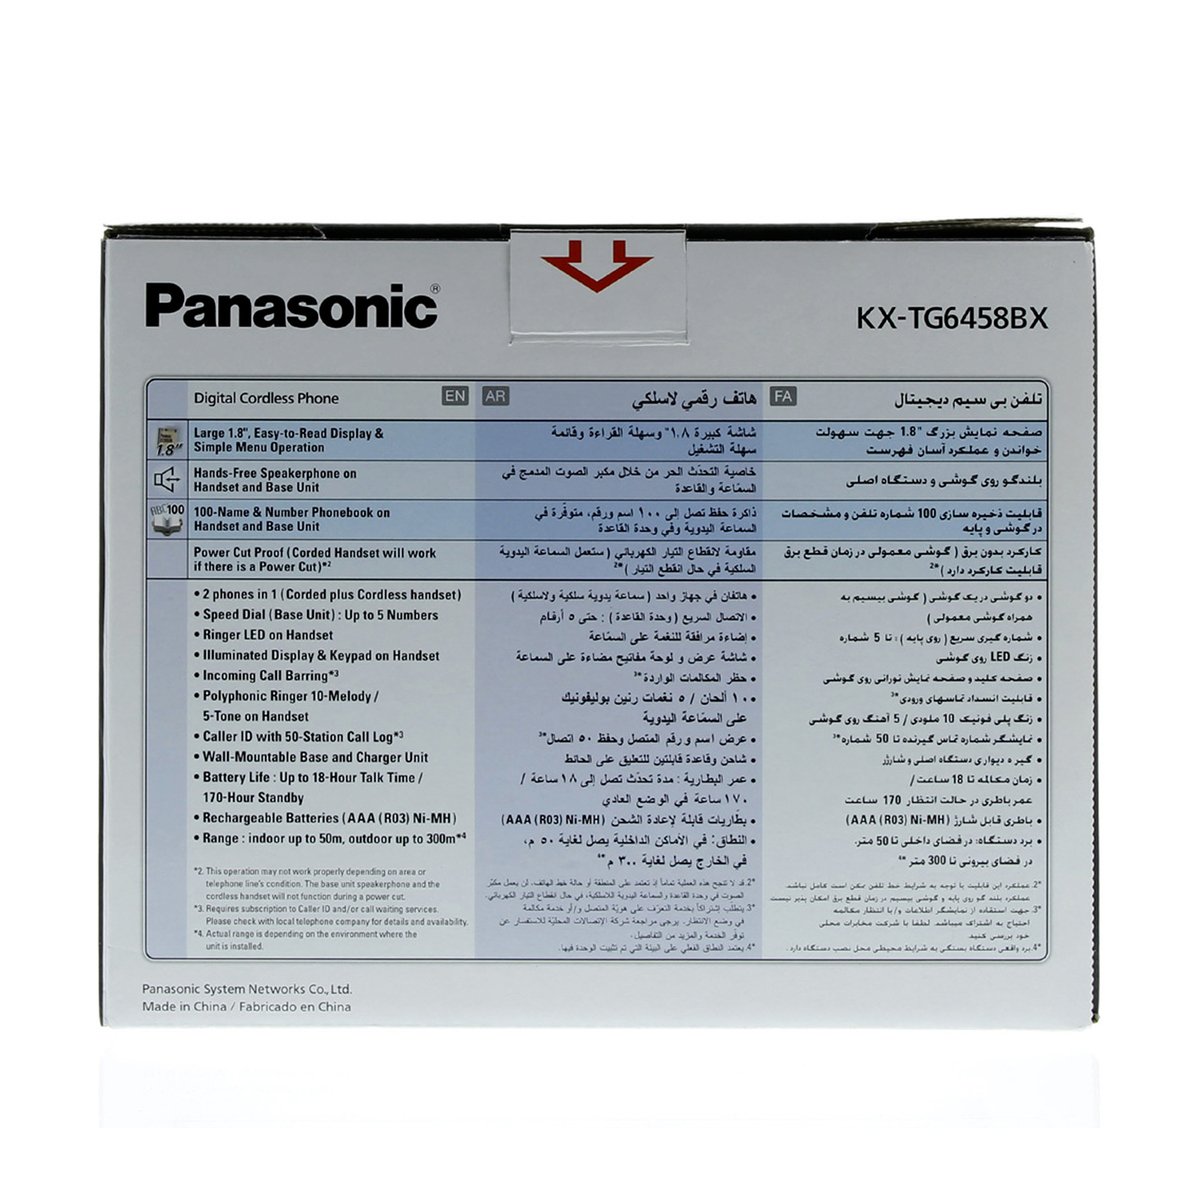 Panasonic Cordless Phone KXTG6561BXT